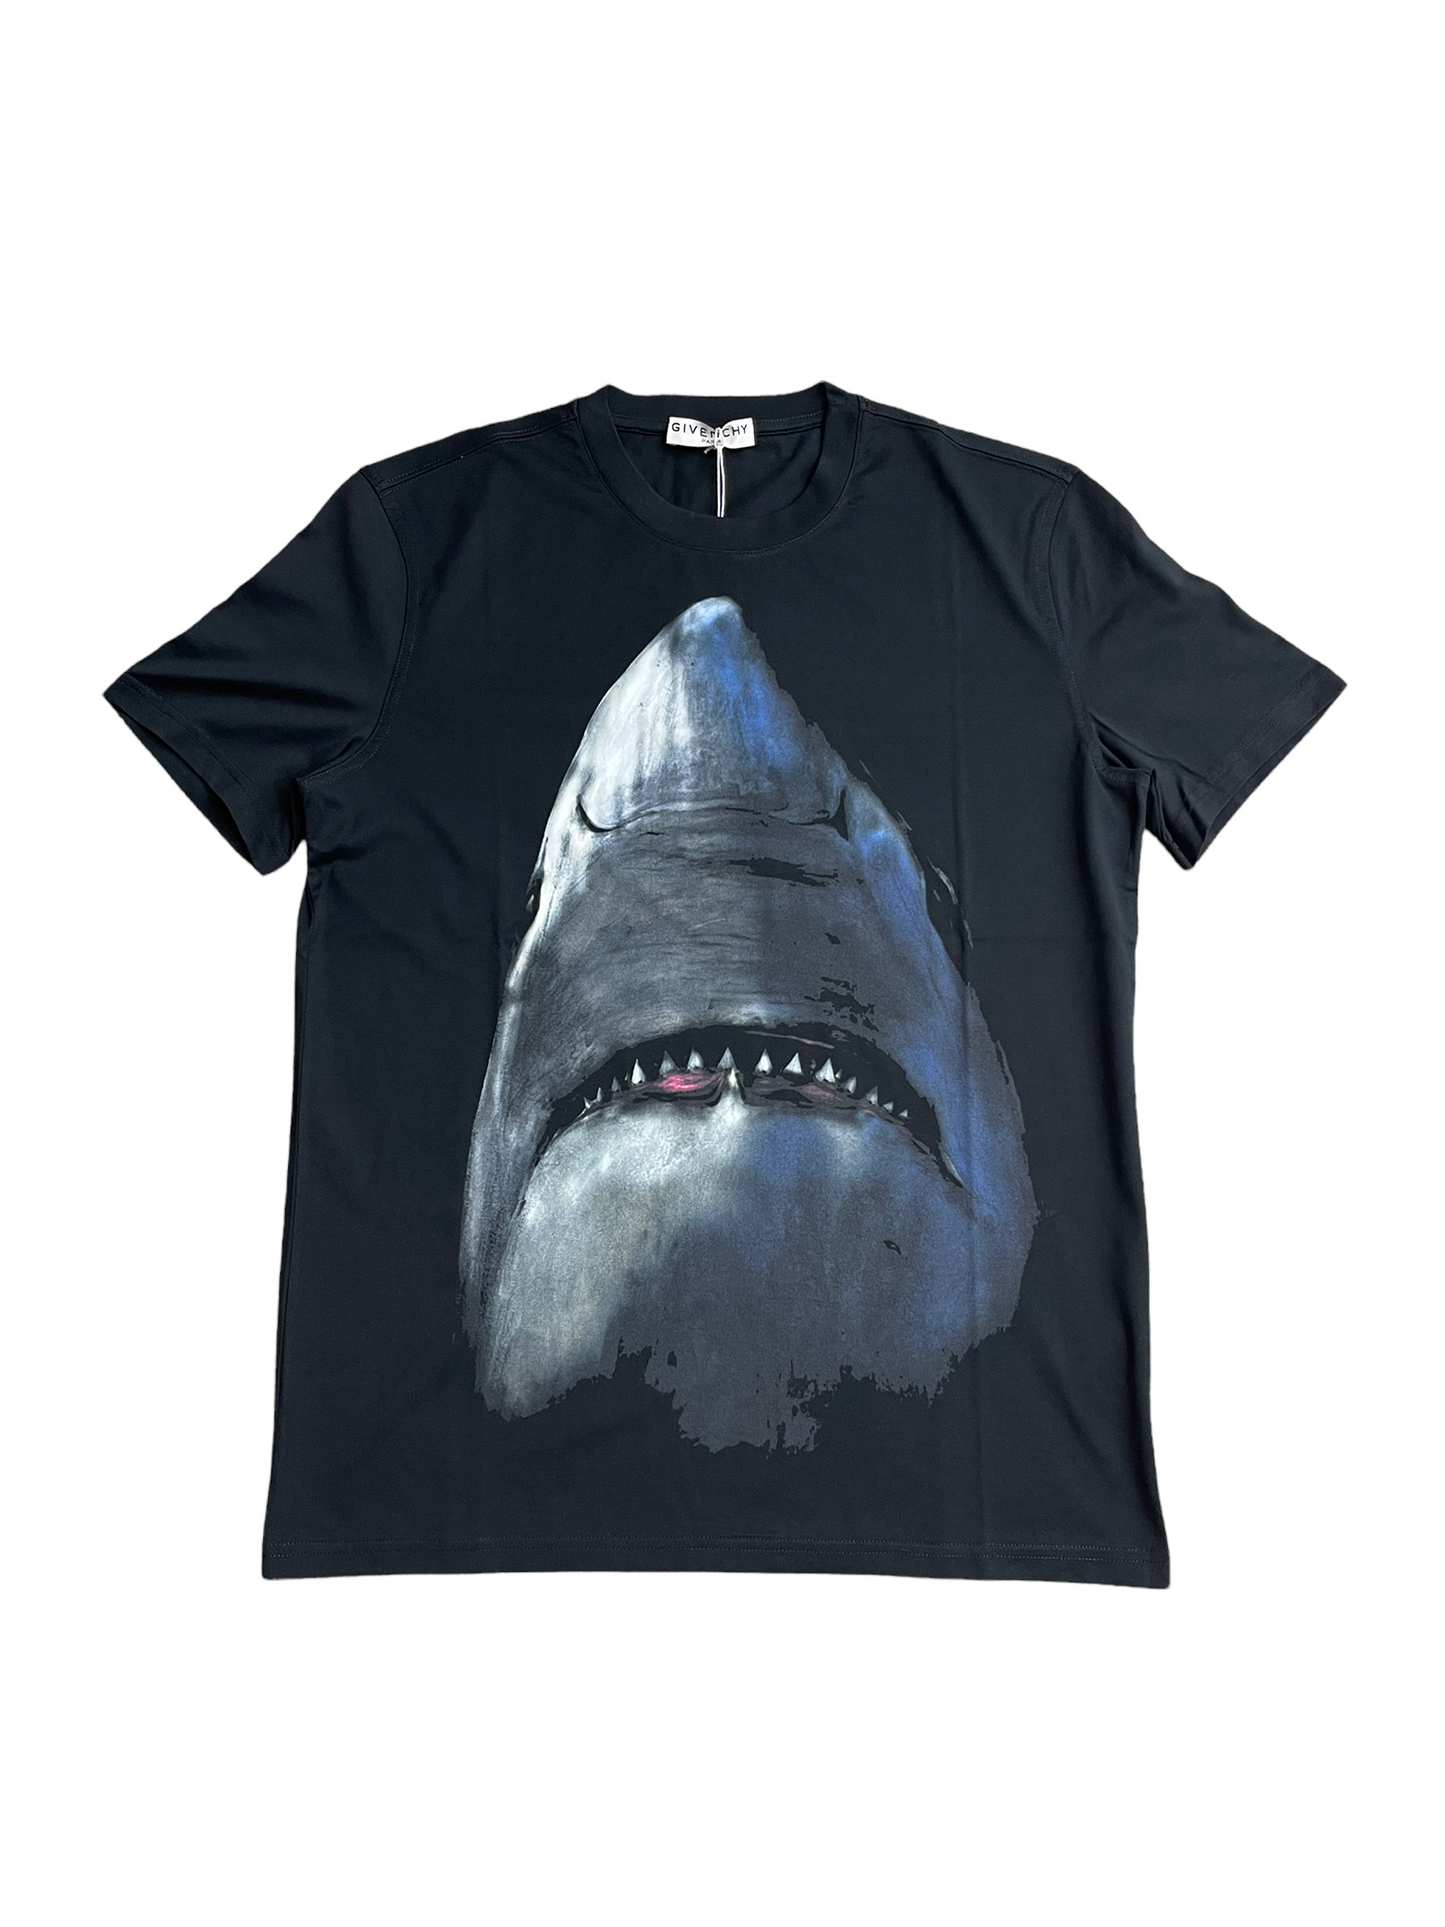 GIVENCHY PARIS SHARK LOGO TSHIRT - BLACK – SGN CLOTHING